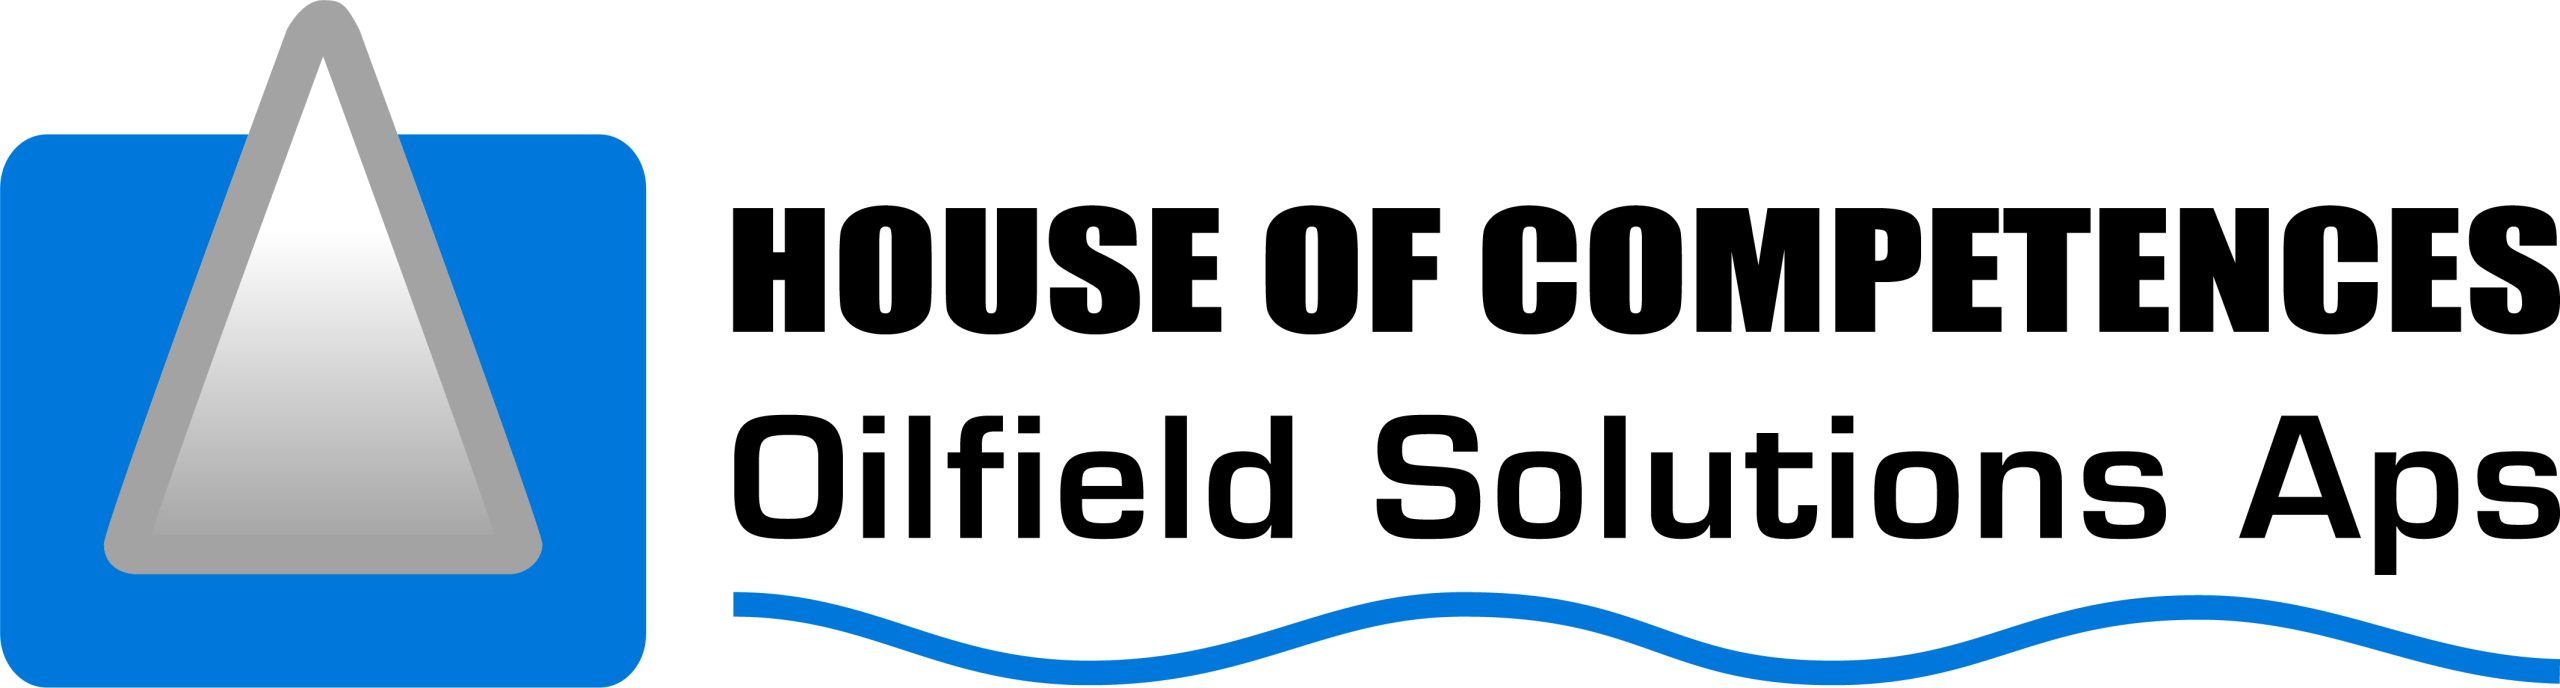 Oilfield Solutions ApS logo